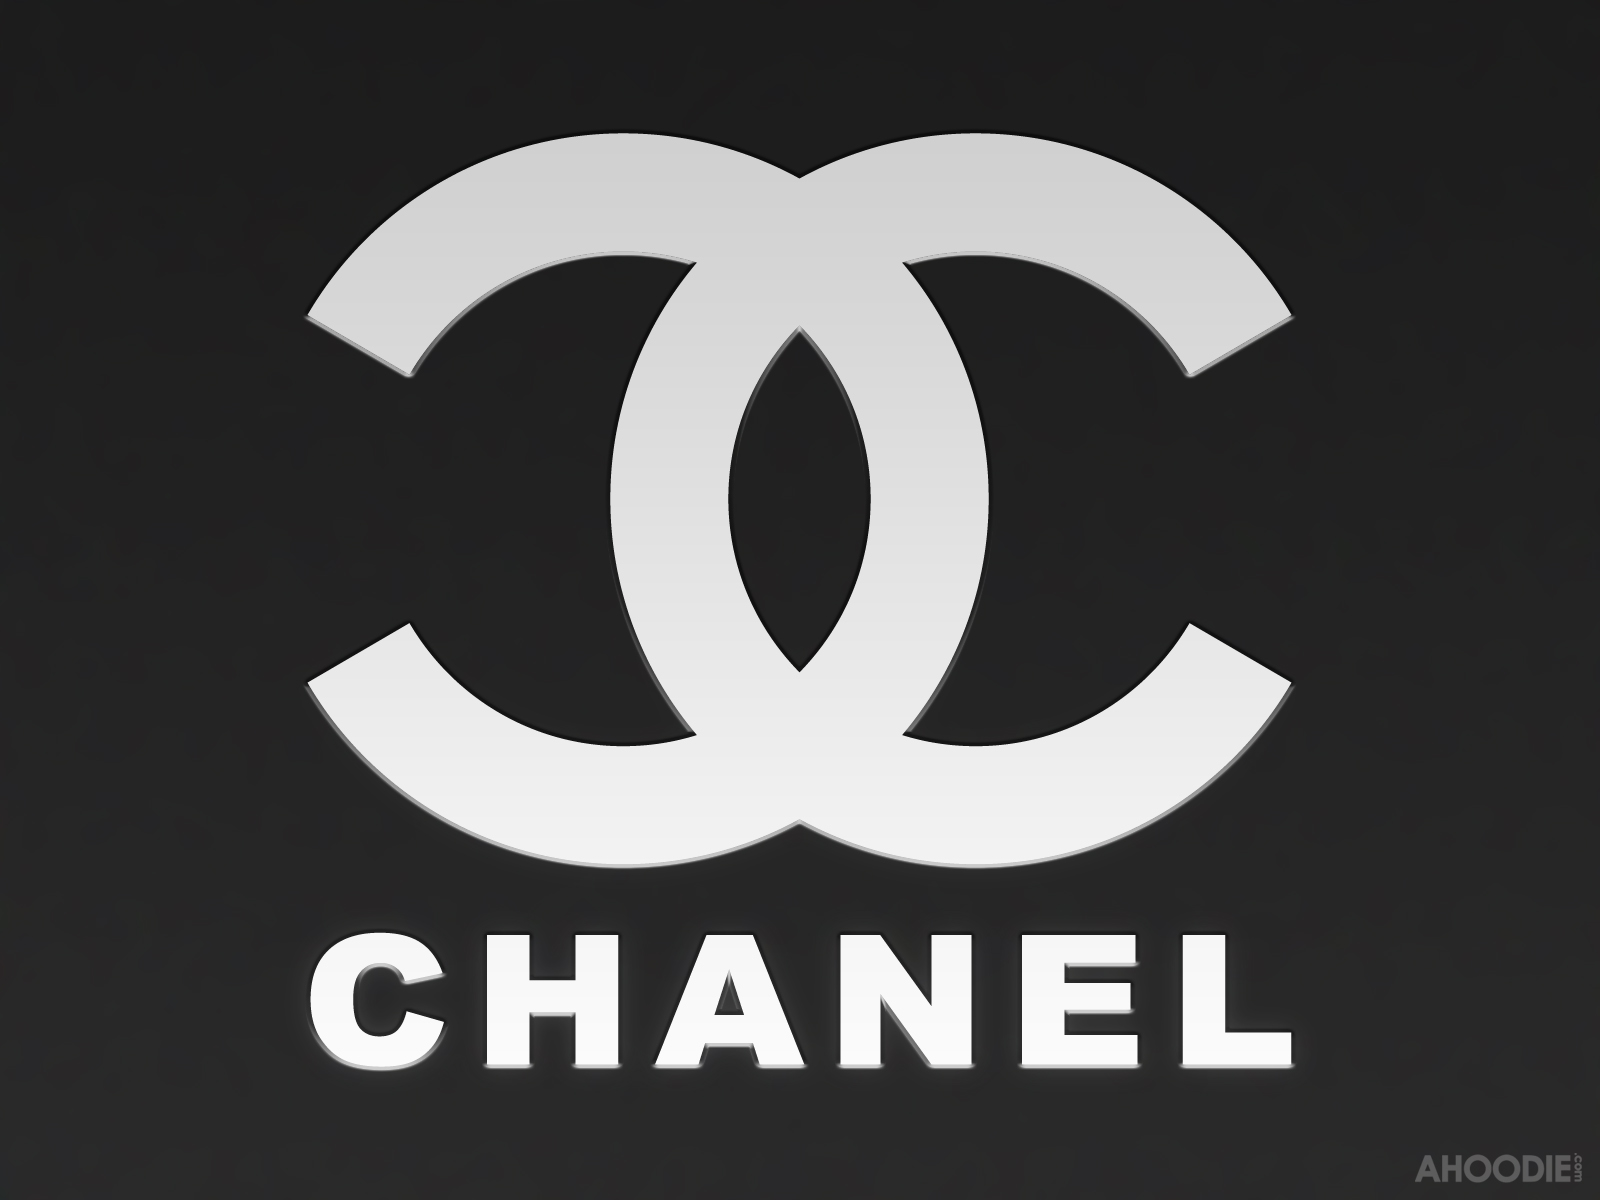 Download wallpapers Chanel black logo creative metal grid background Chanel  logo brands Chanel for desktop free Pictures for desktop free